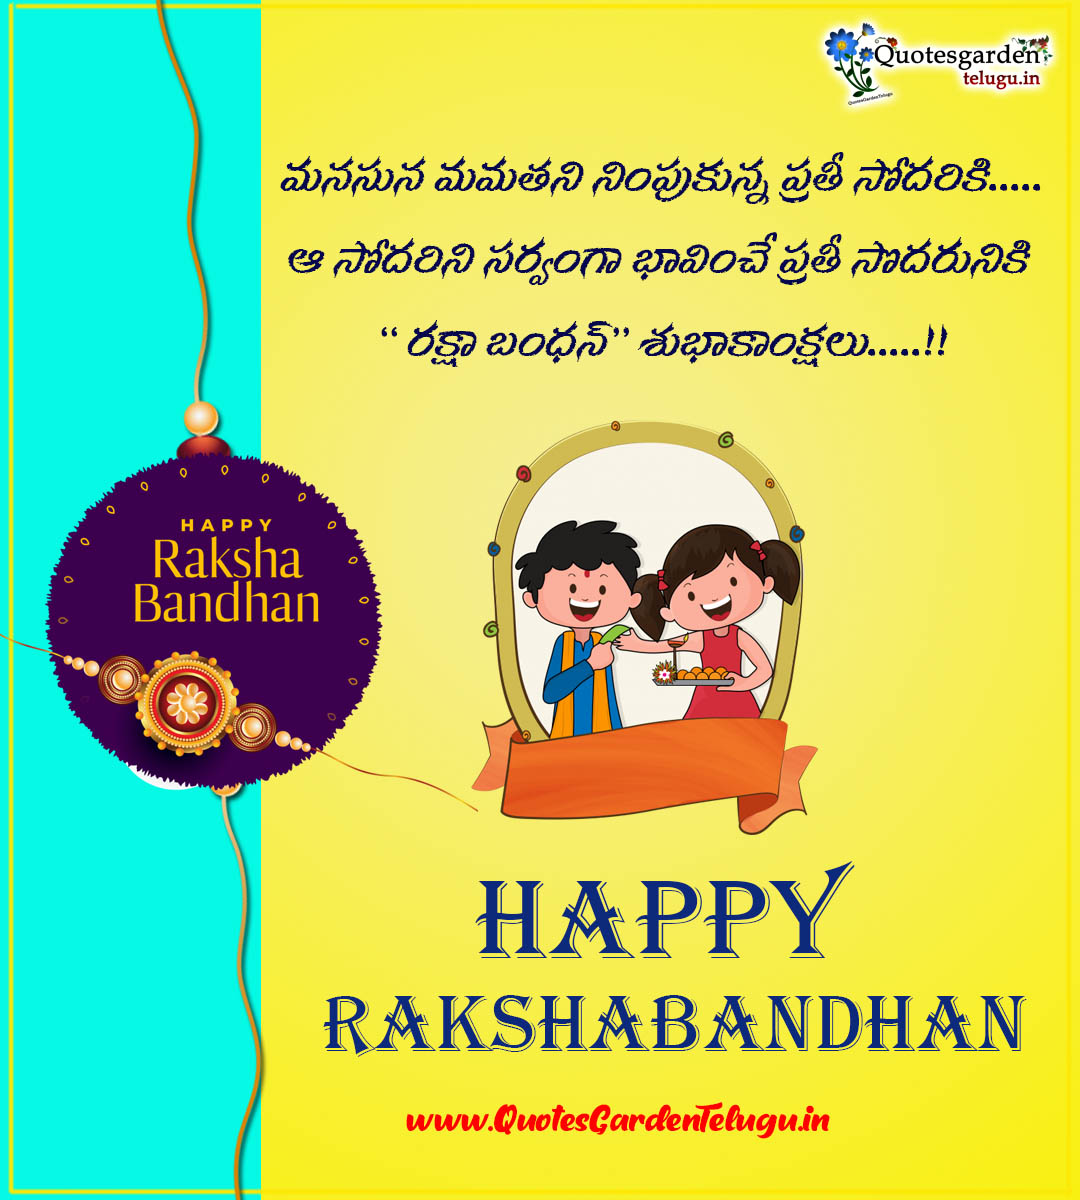 Latest Raksha Bandhan wishes greetings in telugu images free ...